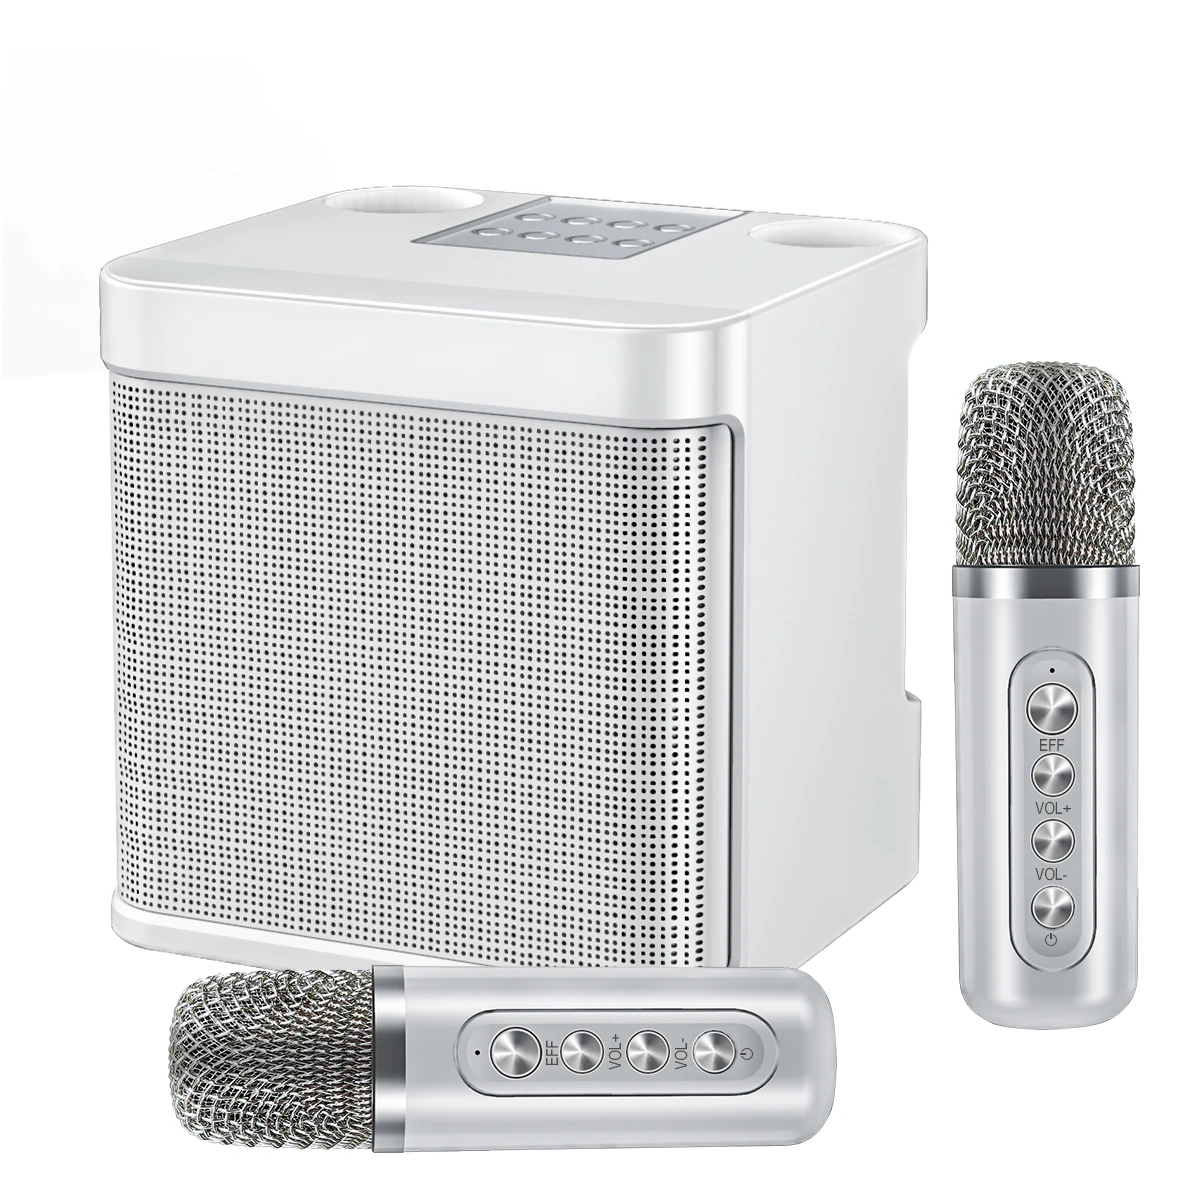 Karaoke Machine Speaker & 2 Wireless Microphones YS-203 Portable